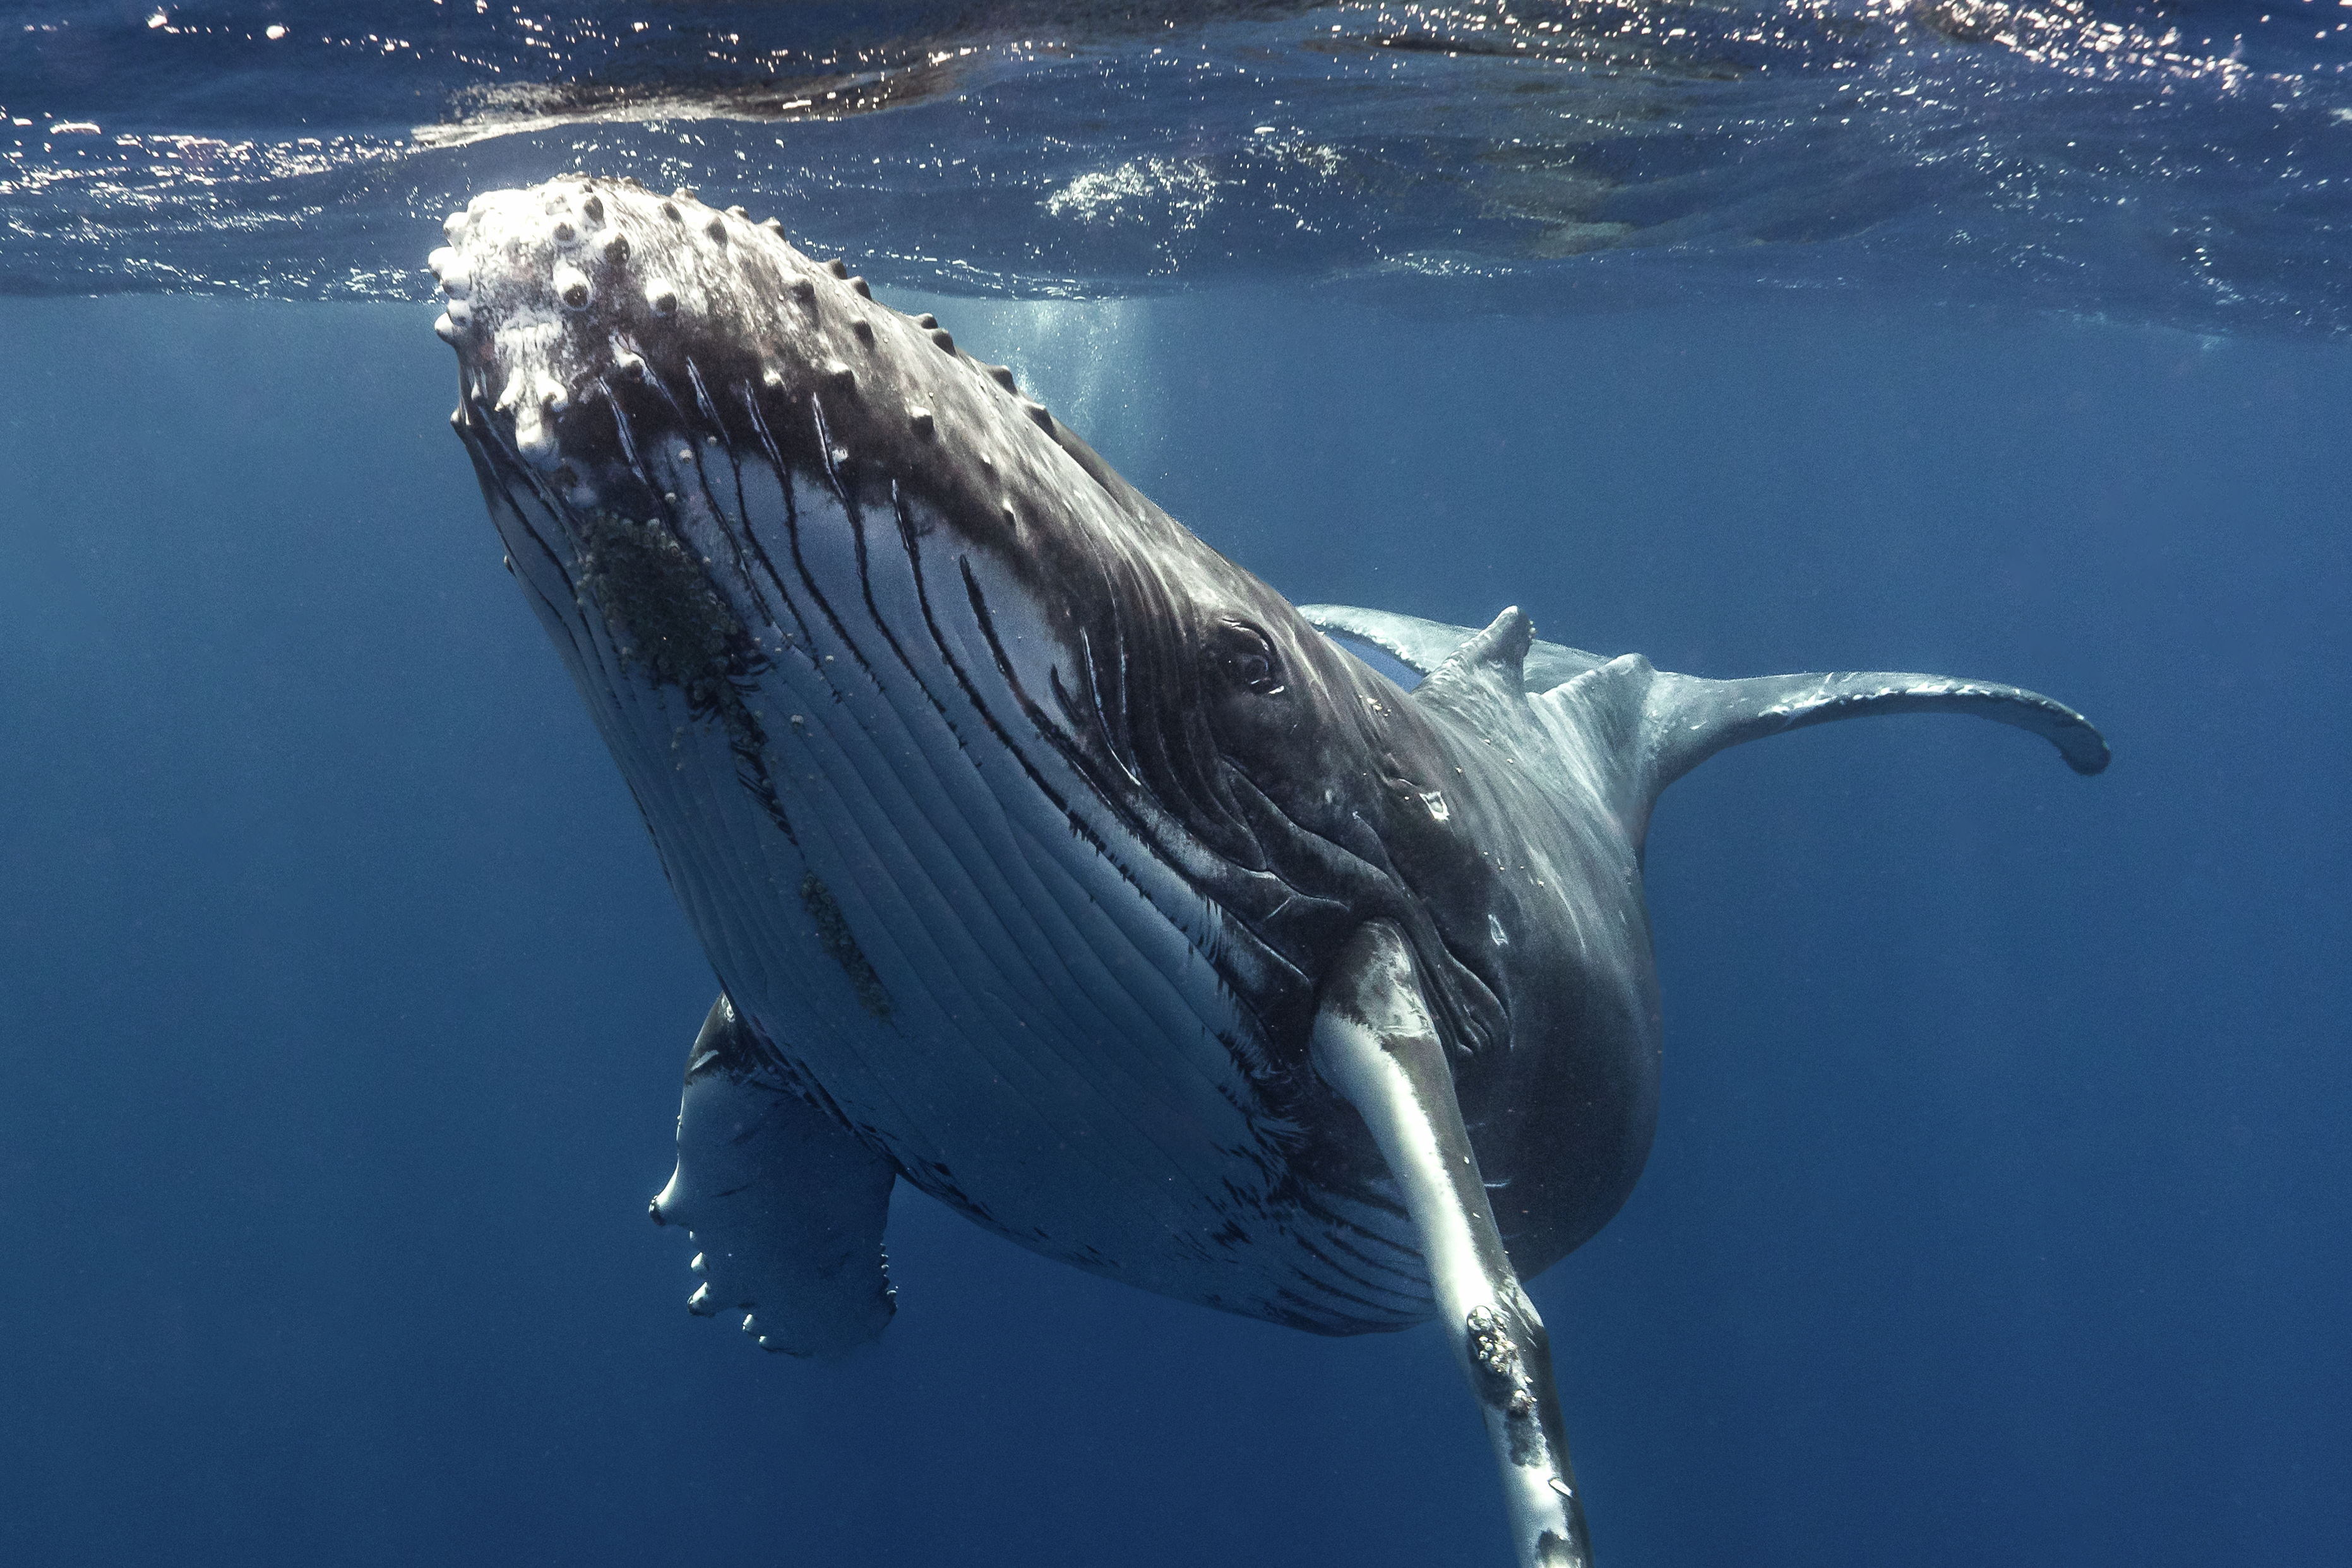 Humpback whale entangled off OC coast, crews work to free it